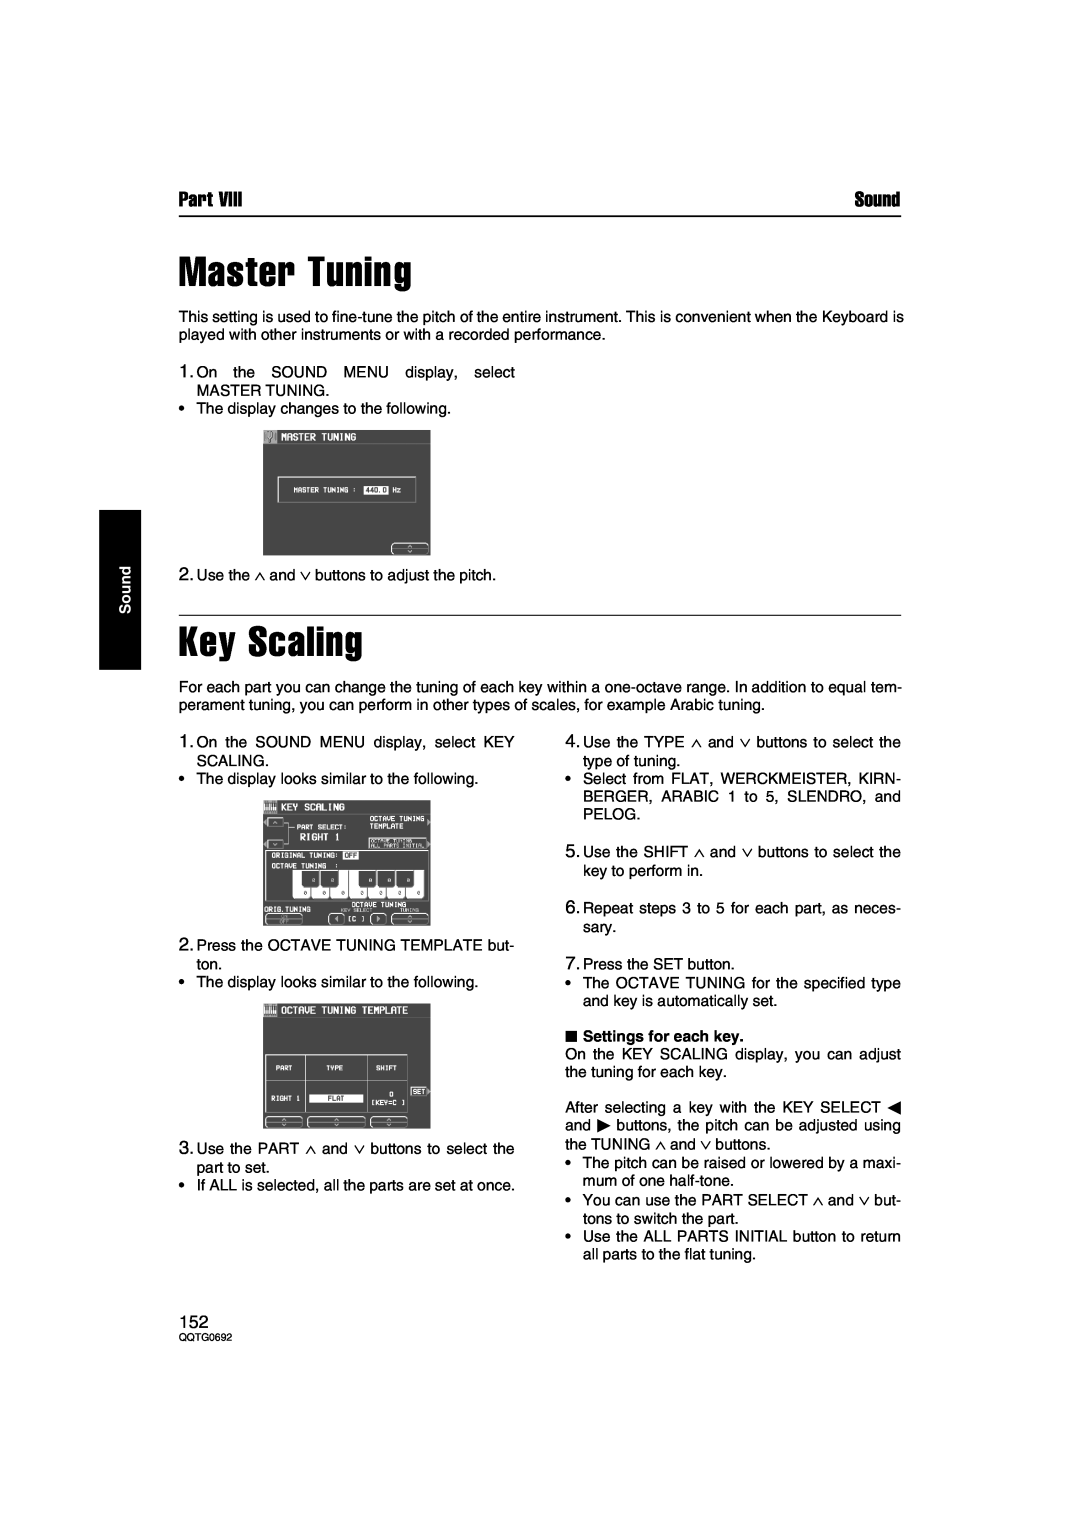 Panasonic SX-KN2600, SX-KN2400 manual Master Tuning, Key Scaling, Settings for each key, Part, Sound 